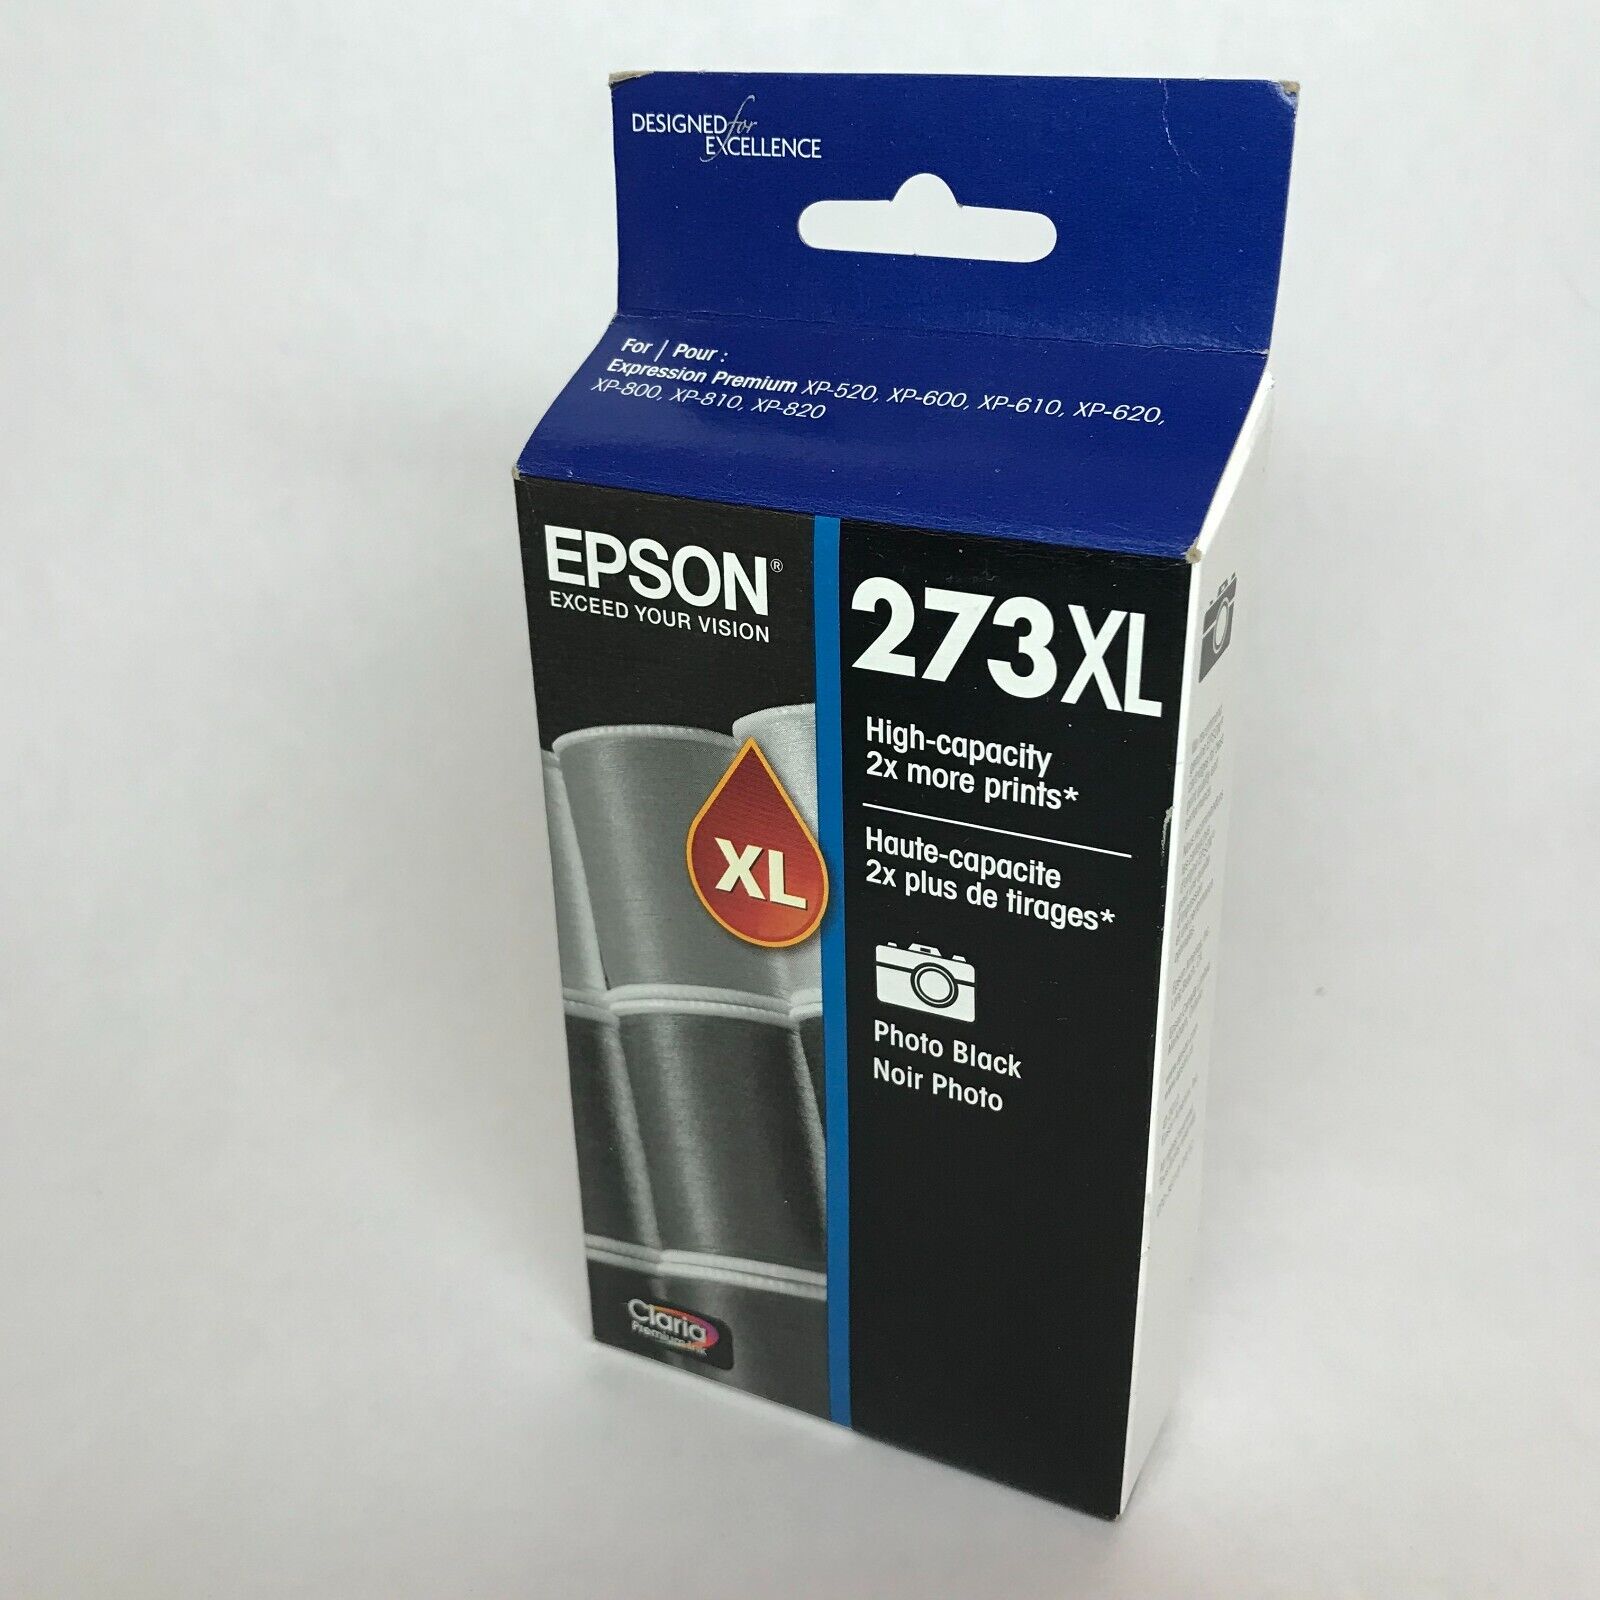 Epson 273XL High-Capacity Claria Premium Ink Cartridge T273XL120 NEW EXP 05.2018